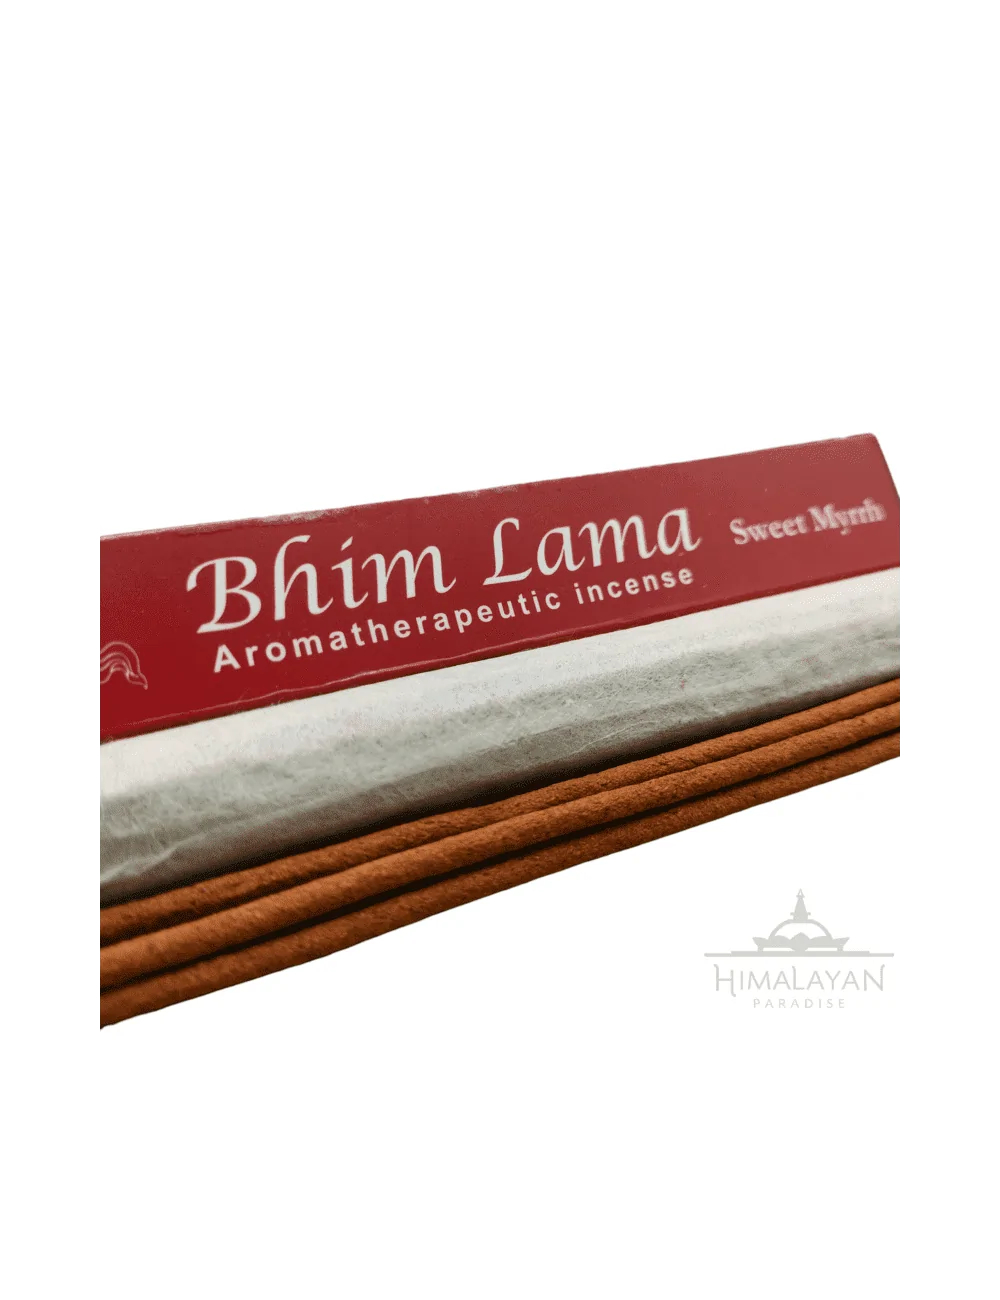 Incienso Bhim Lama Sweet Myrrh | Himalayan Paradise